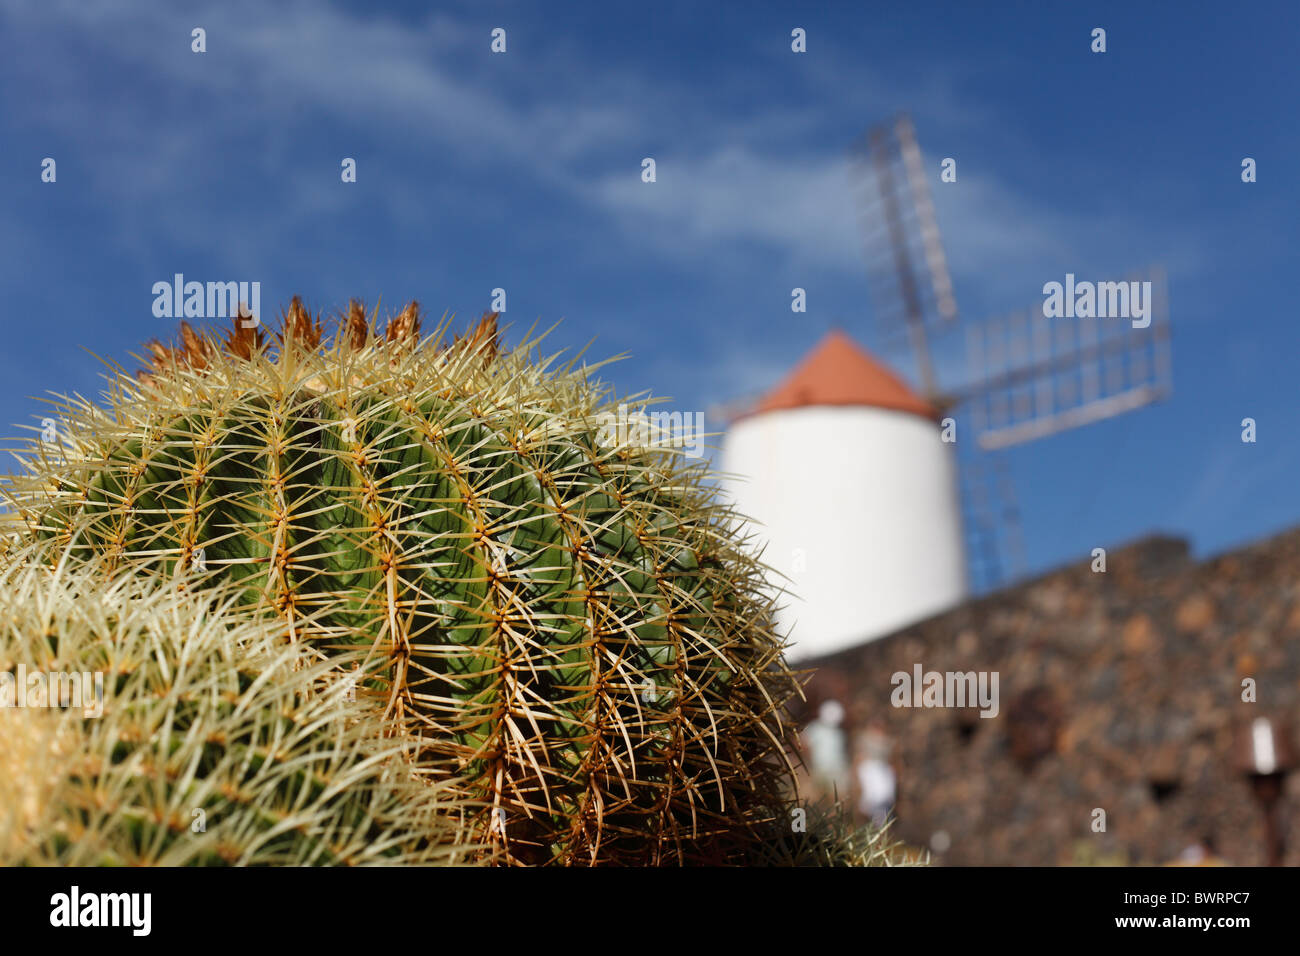 Cactus garden with a windmill, Jardín de cactus, designed by César Manrique, Guatiza, Lanzarote, Canary Islands, Spain, Europe Stock Photo